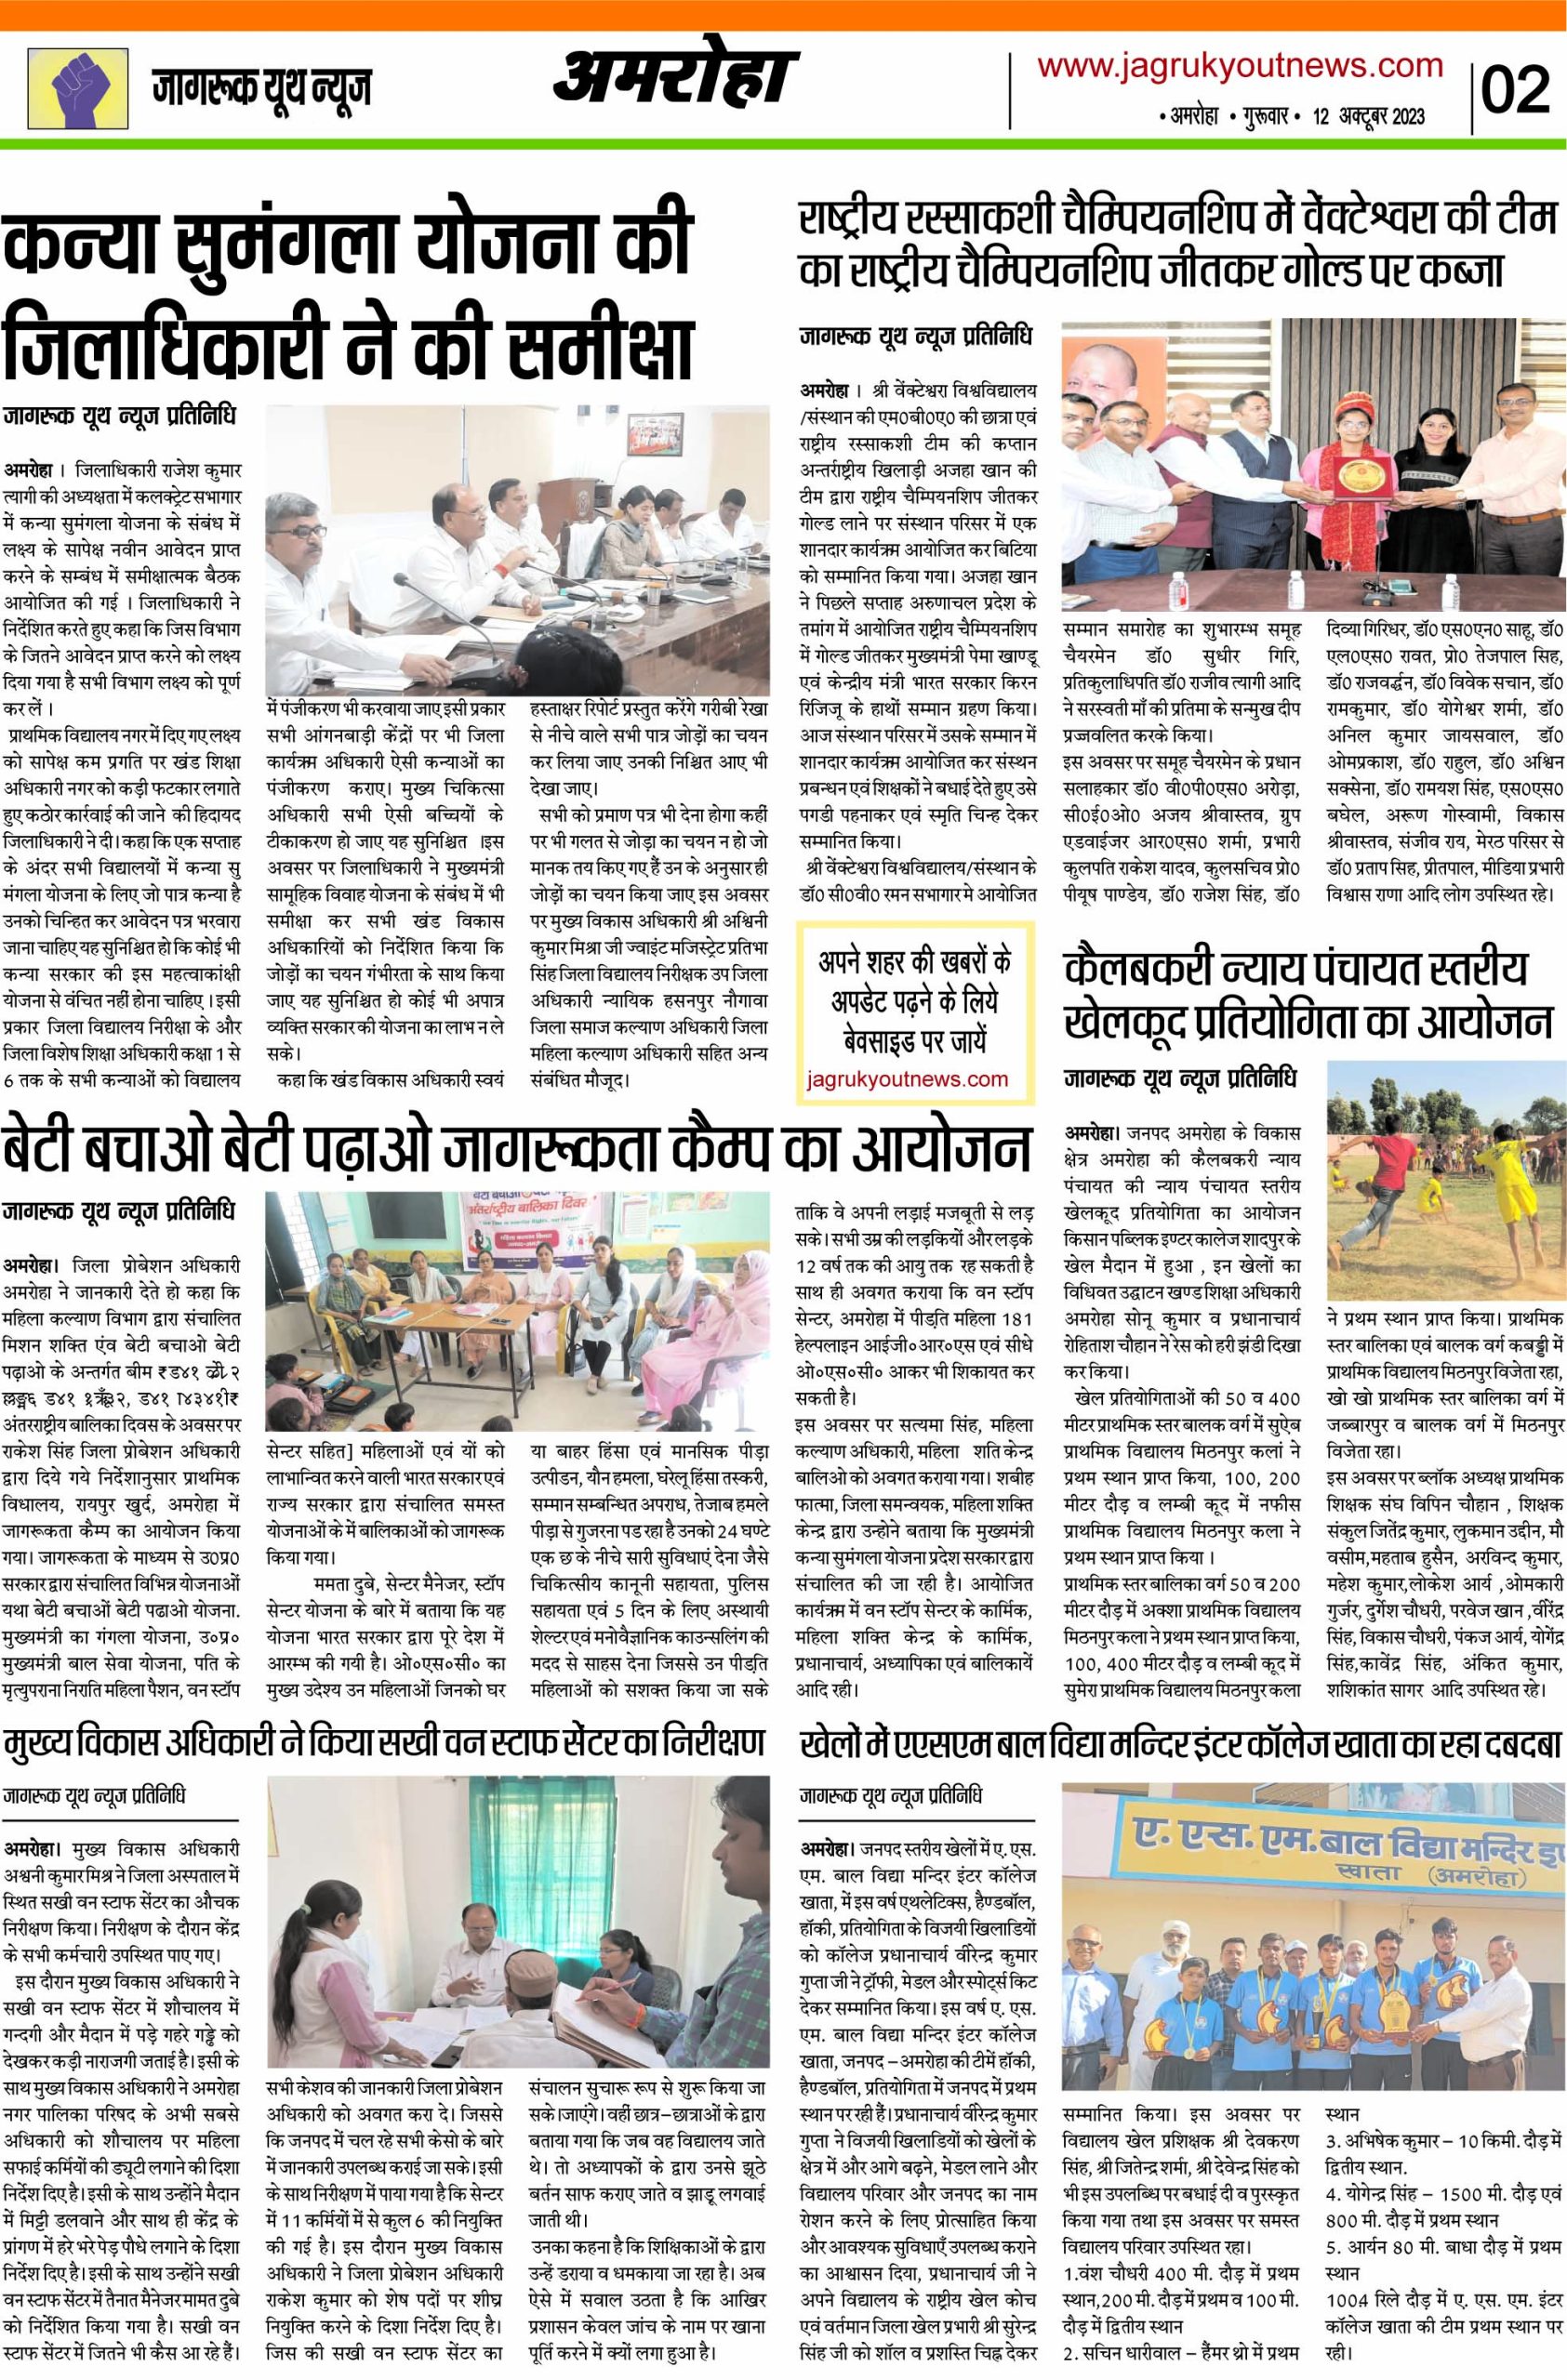 e paper jagruk youth news